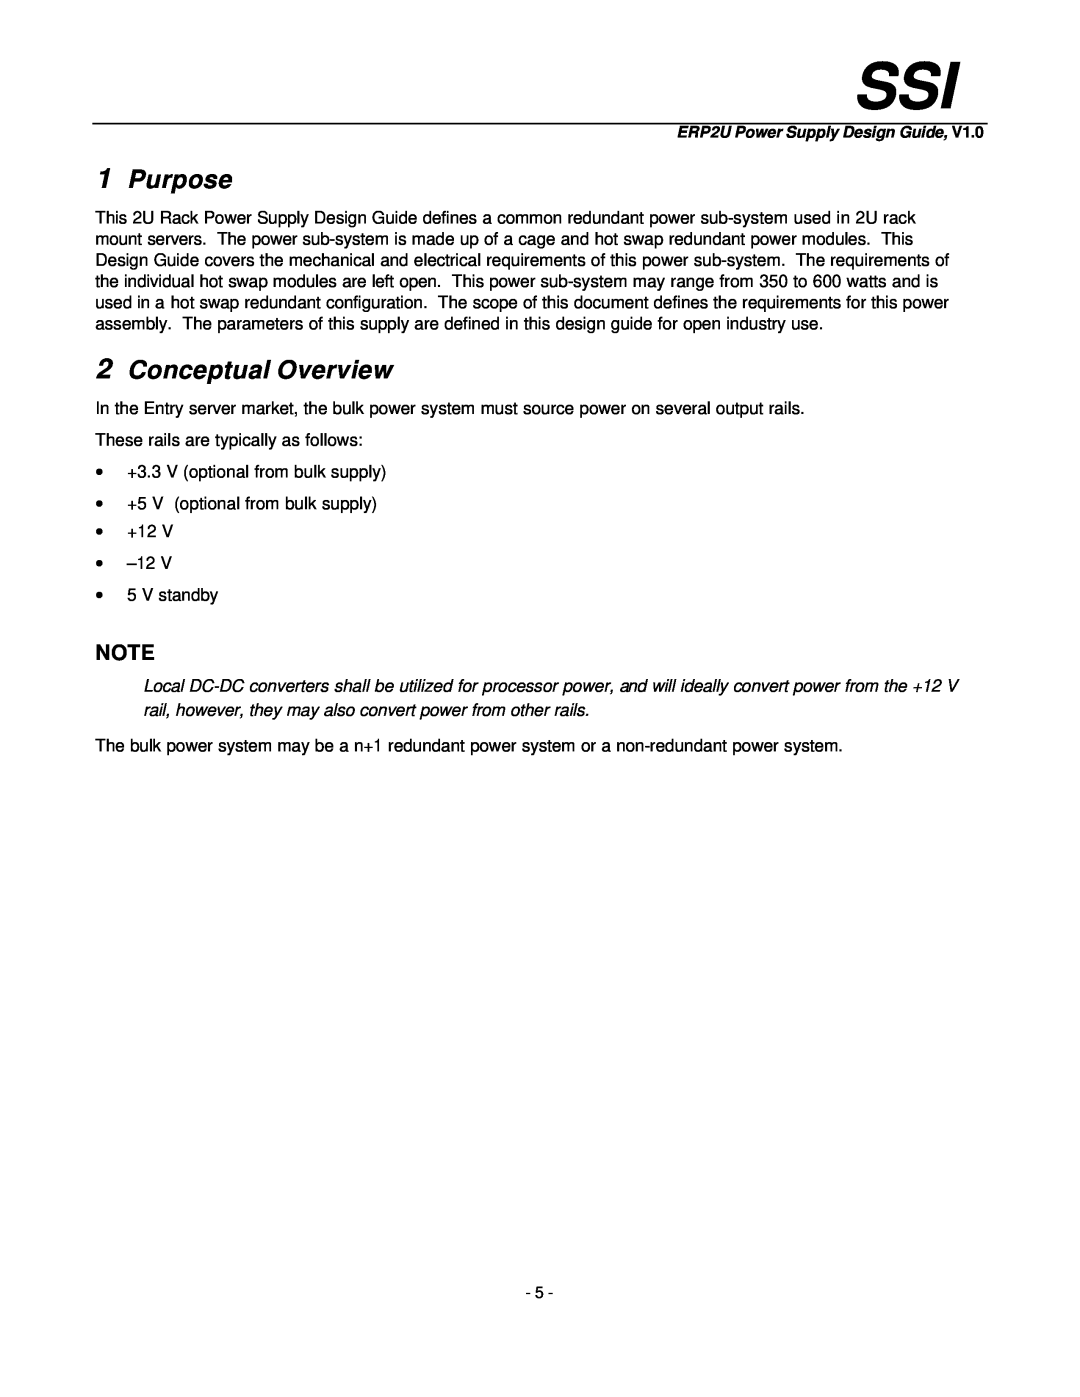 Intel ERP2U manual Purpose, Conceptual Overview 